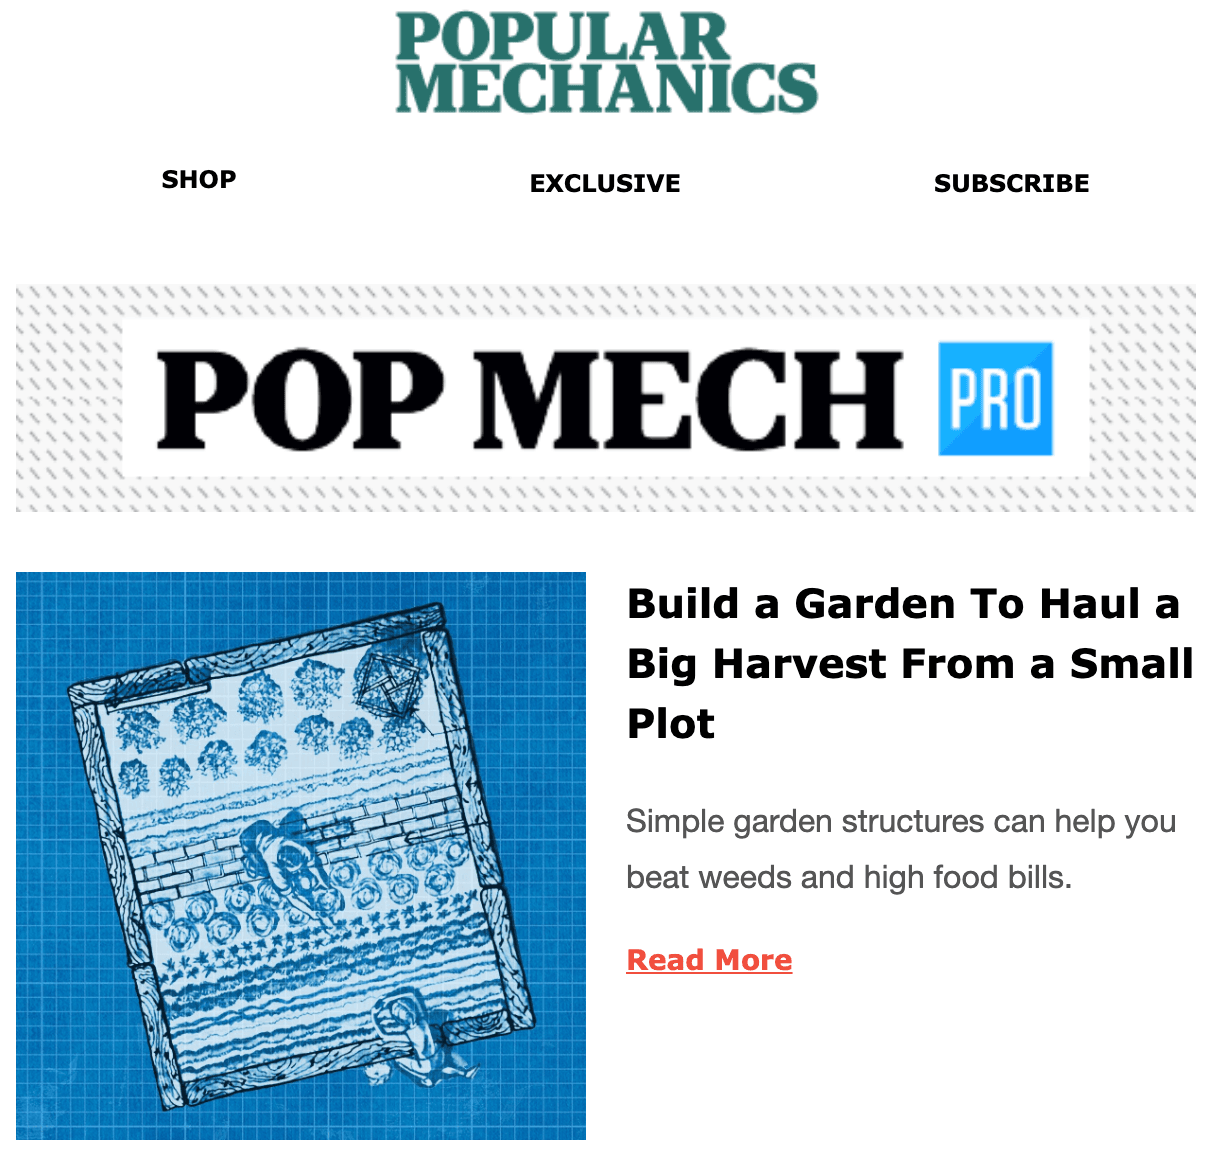 Popular Mechanics newsletter headline